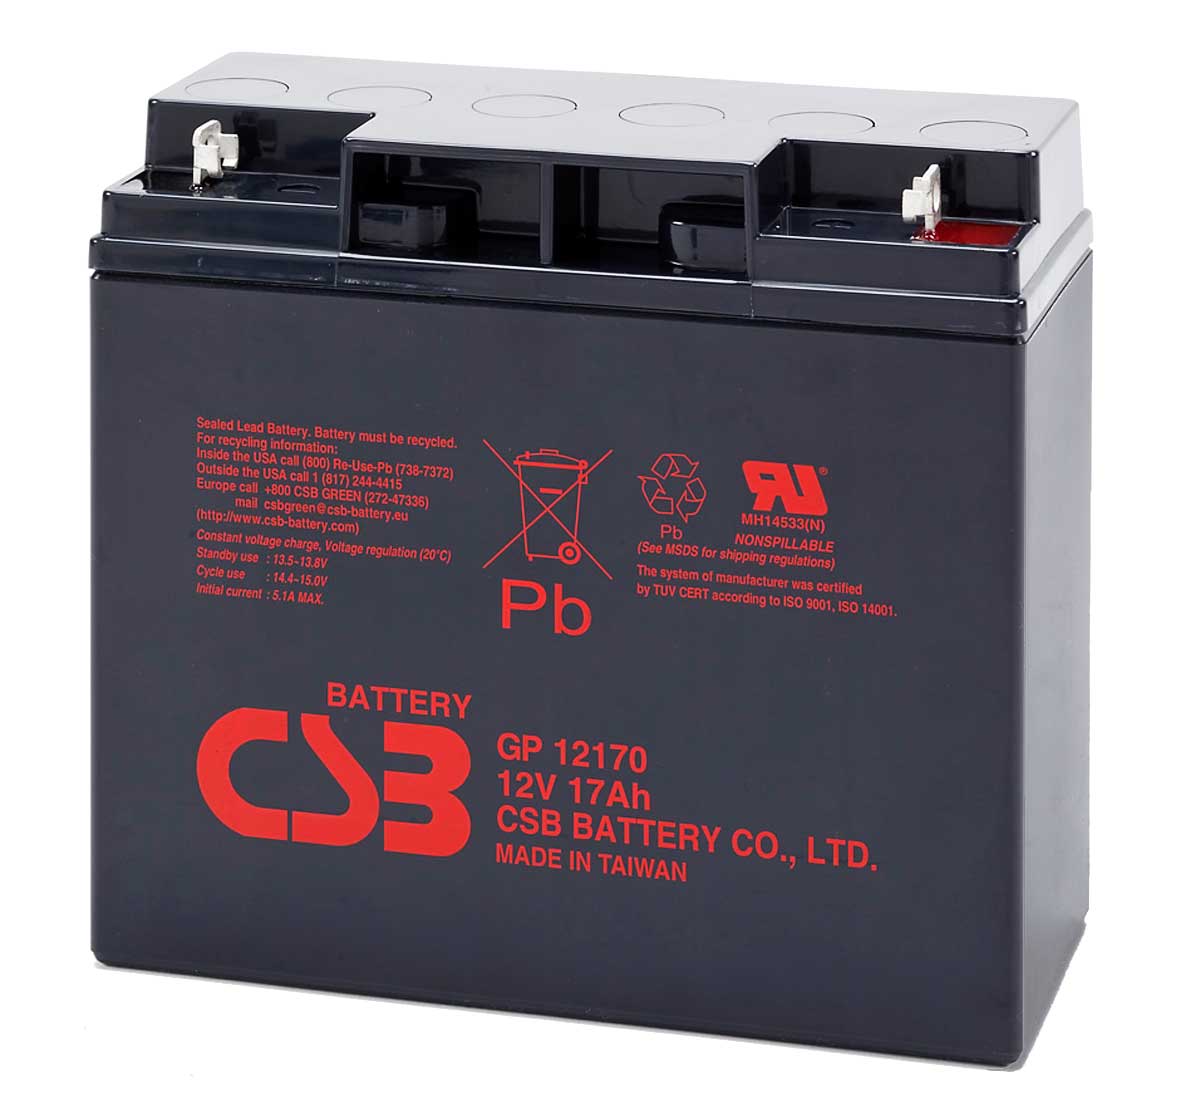  аккумулятор csb hr1221w 12v 5.3ah ups apc  в украине .